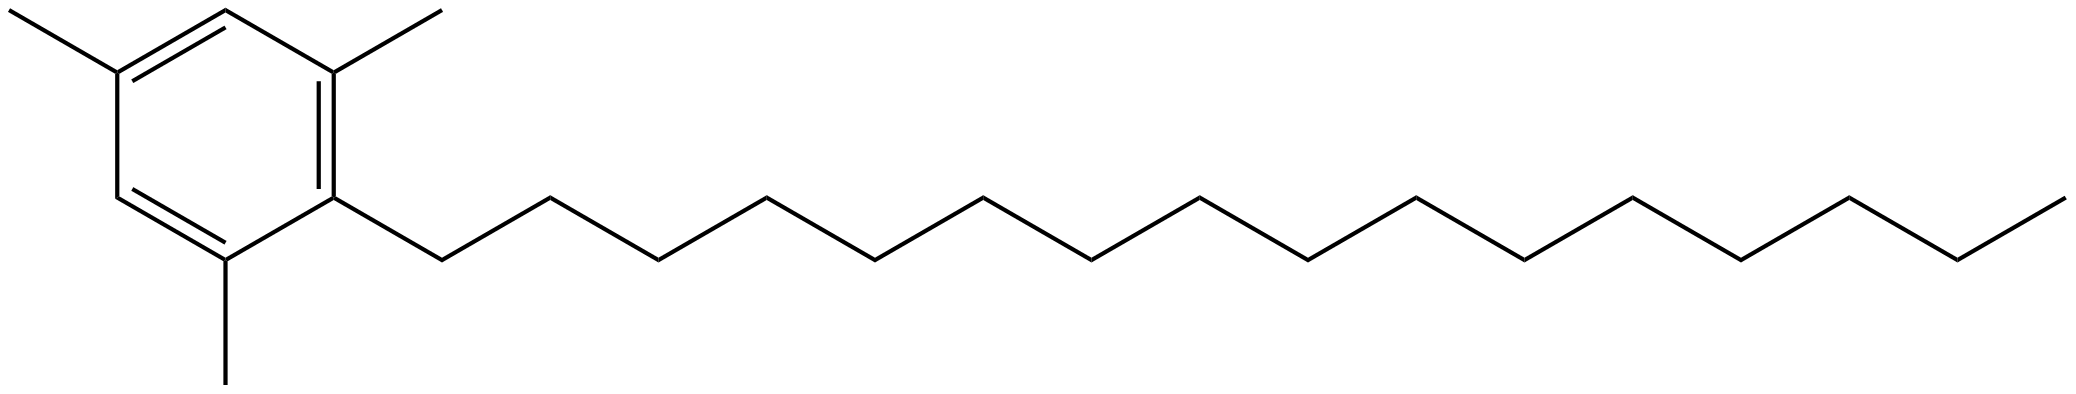 Image of 1-hexadecyl-2,4,6-trimethylbenzene